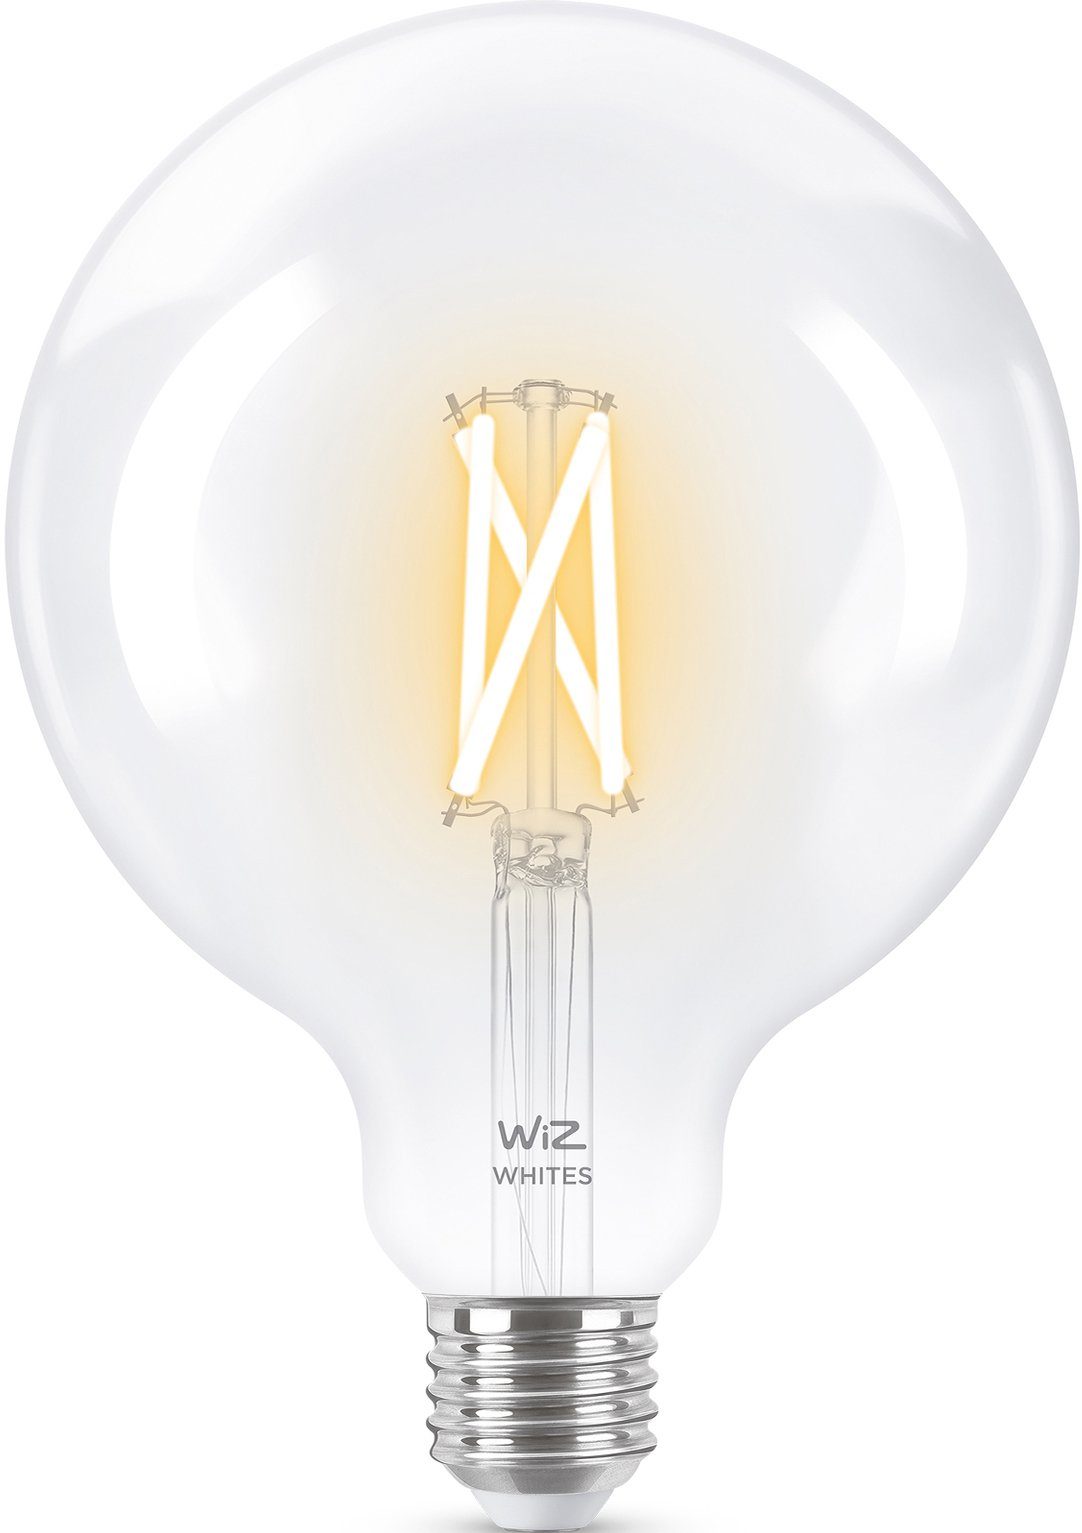 Filament Filament Warmweiß, WiZ G125 Vintage-Design 60W Clear LED klassisches E27, Wiz White für St., Globeform Einzelpack, Tunable Lampen LED-Filament E27 1